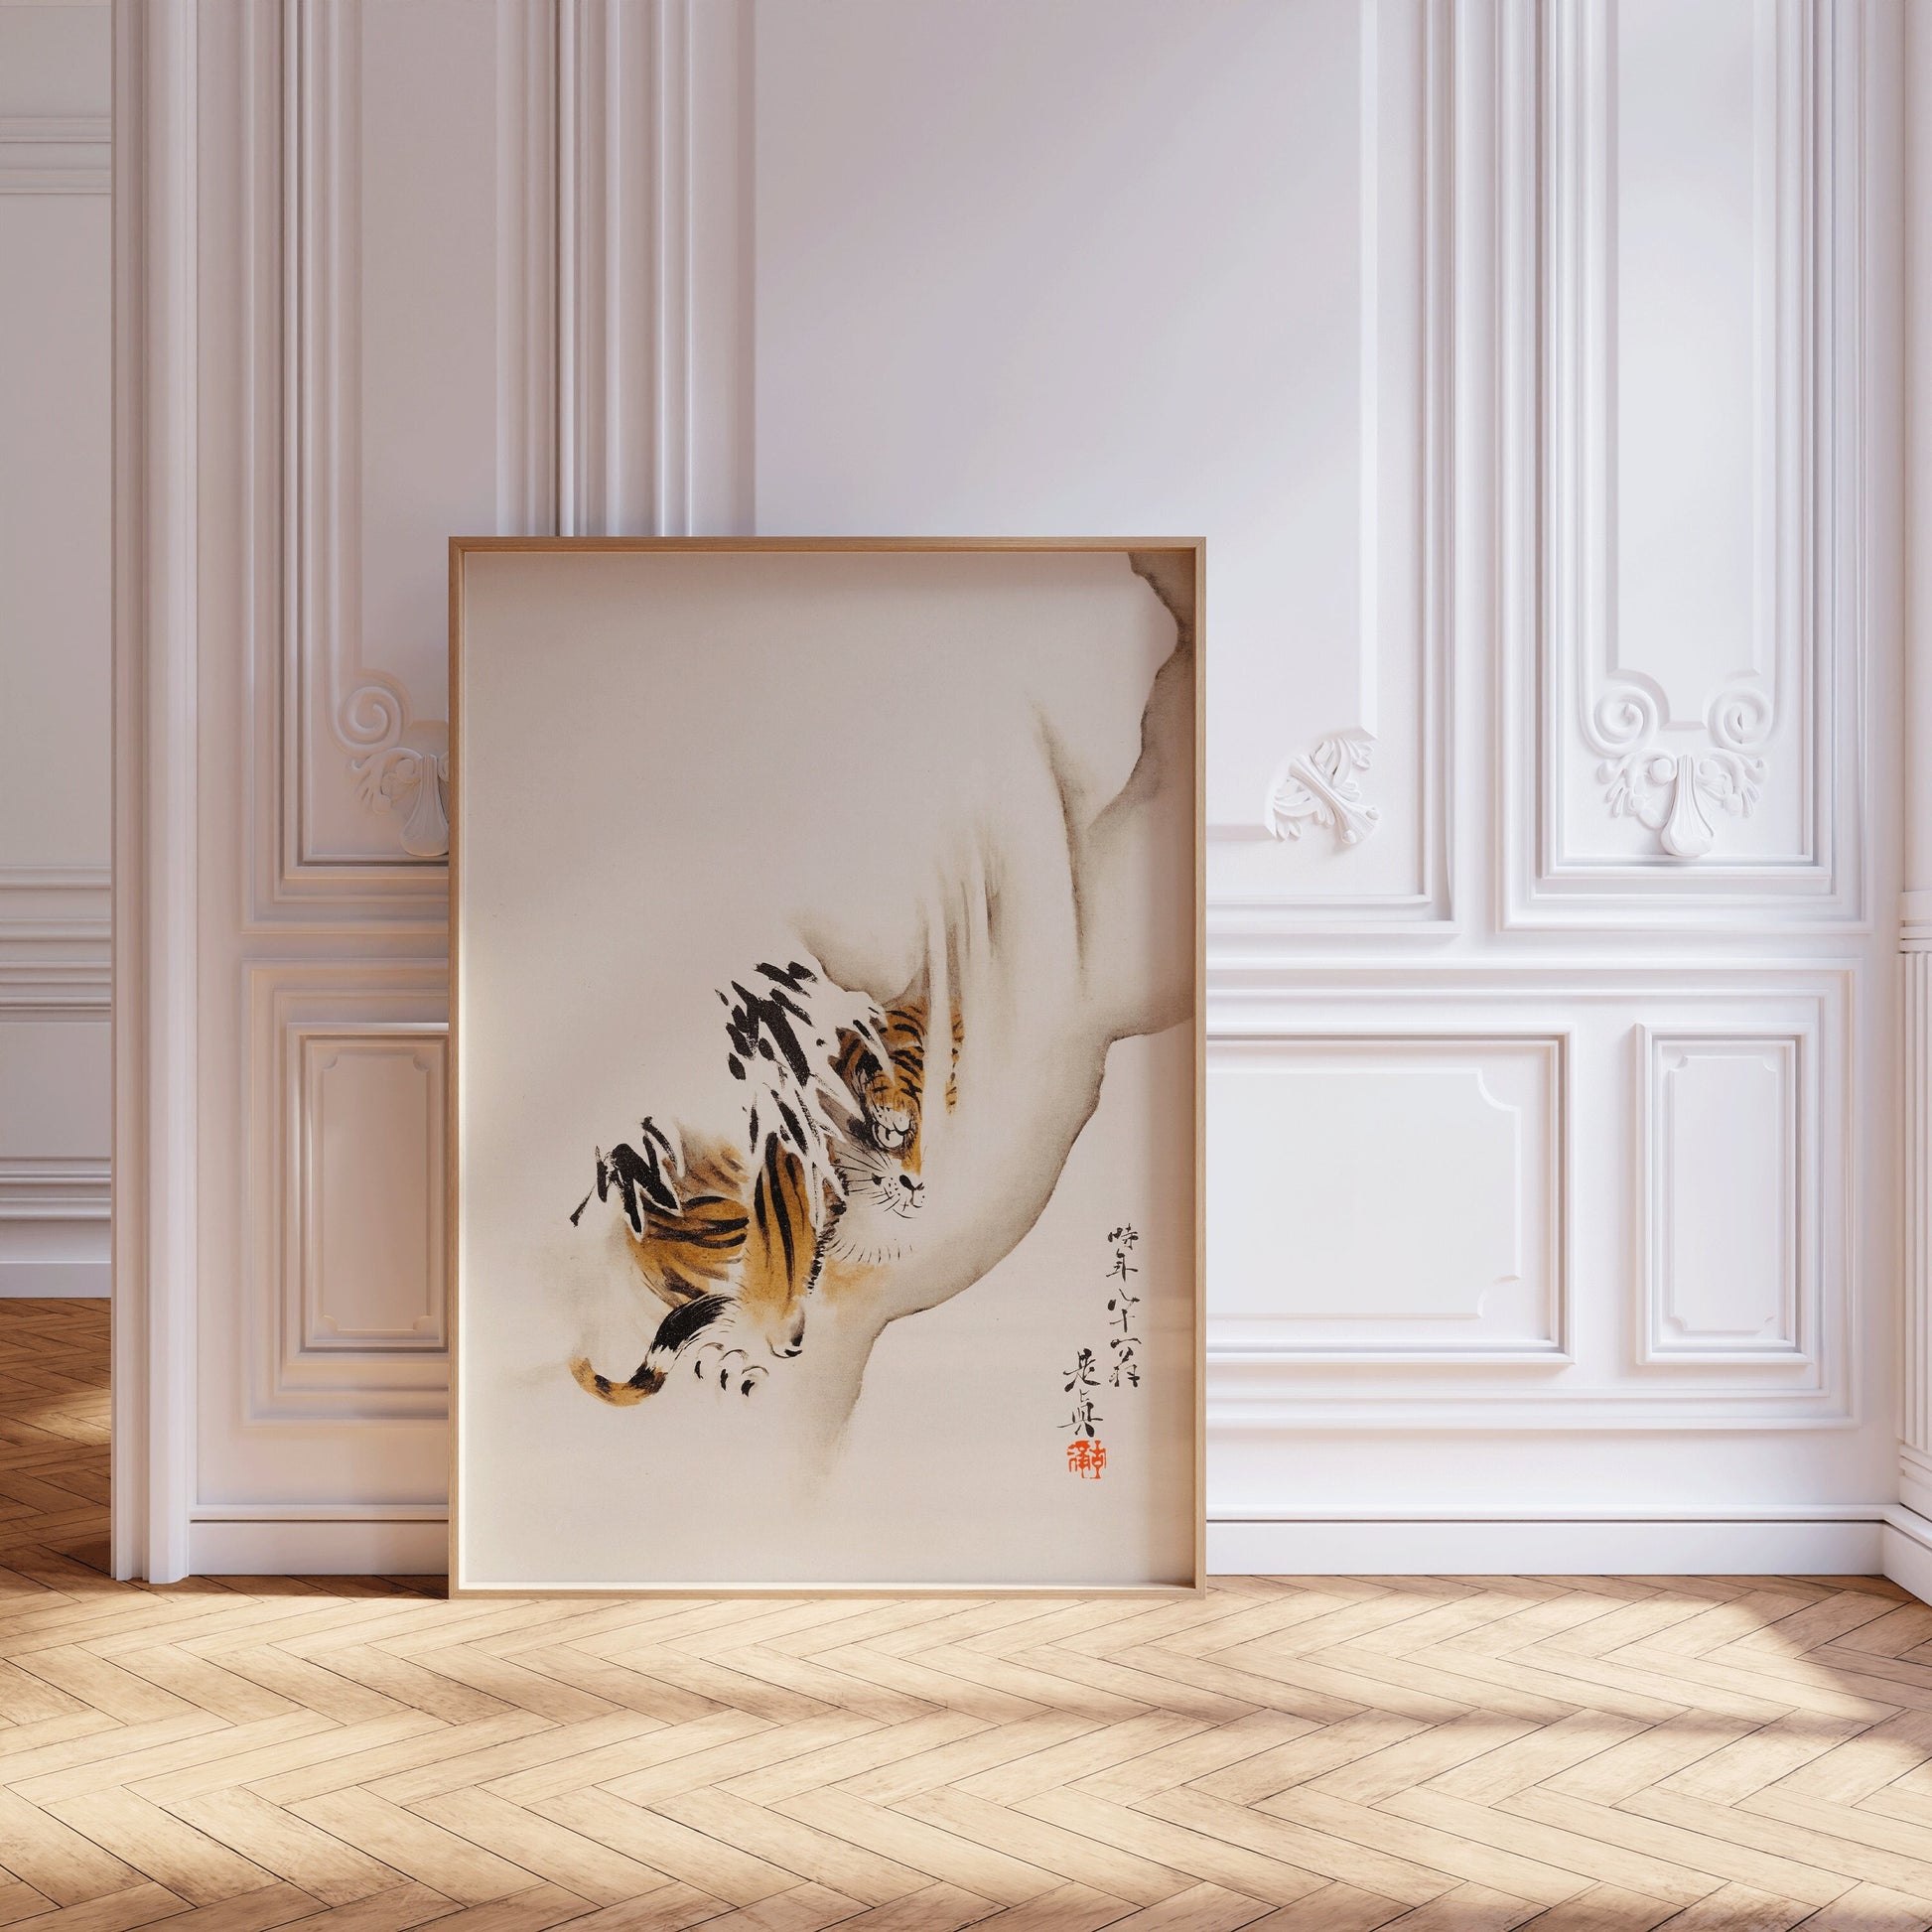 Shibata Zeshin - Tiger | Vintage Japanese Woodblock Art (available framed ready to hang or unframed)